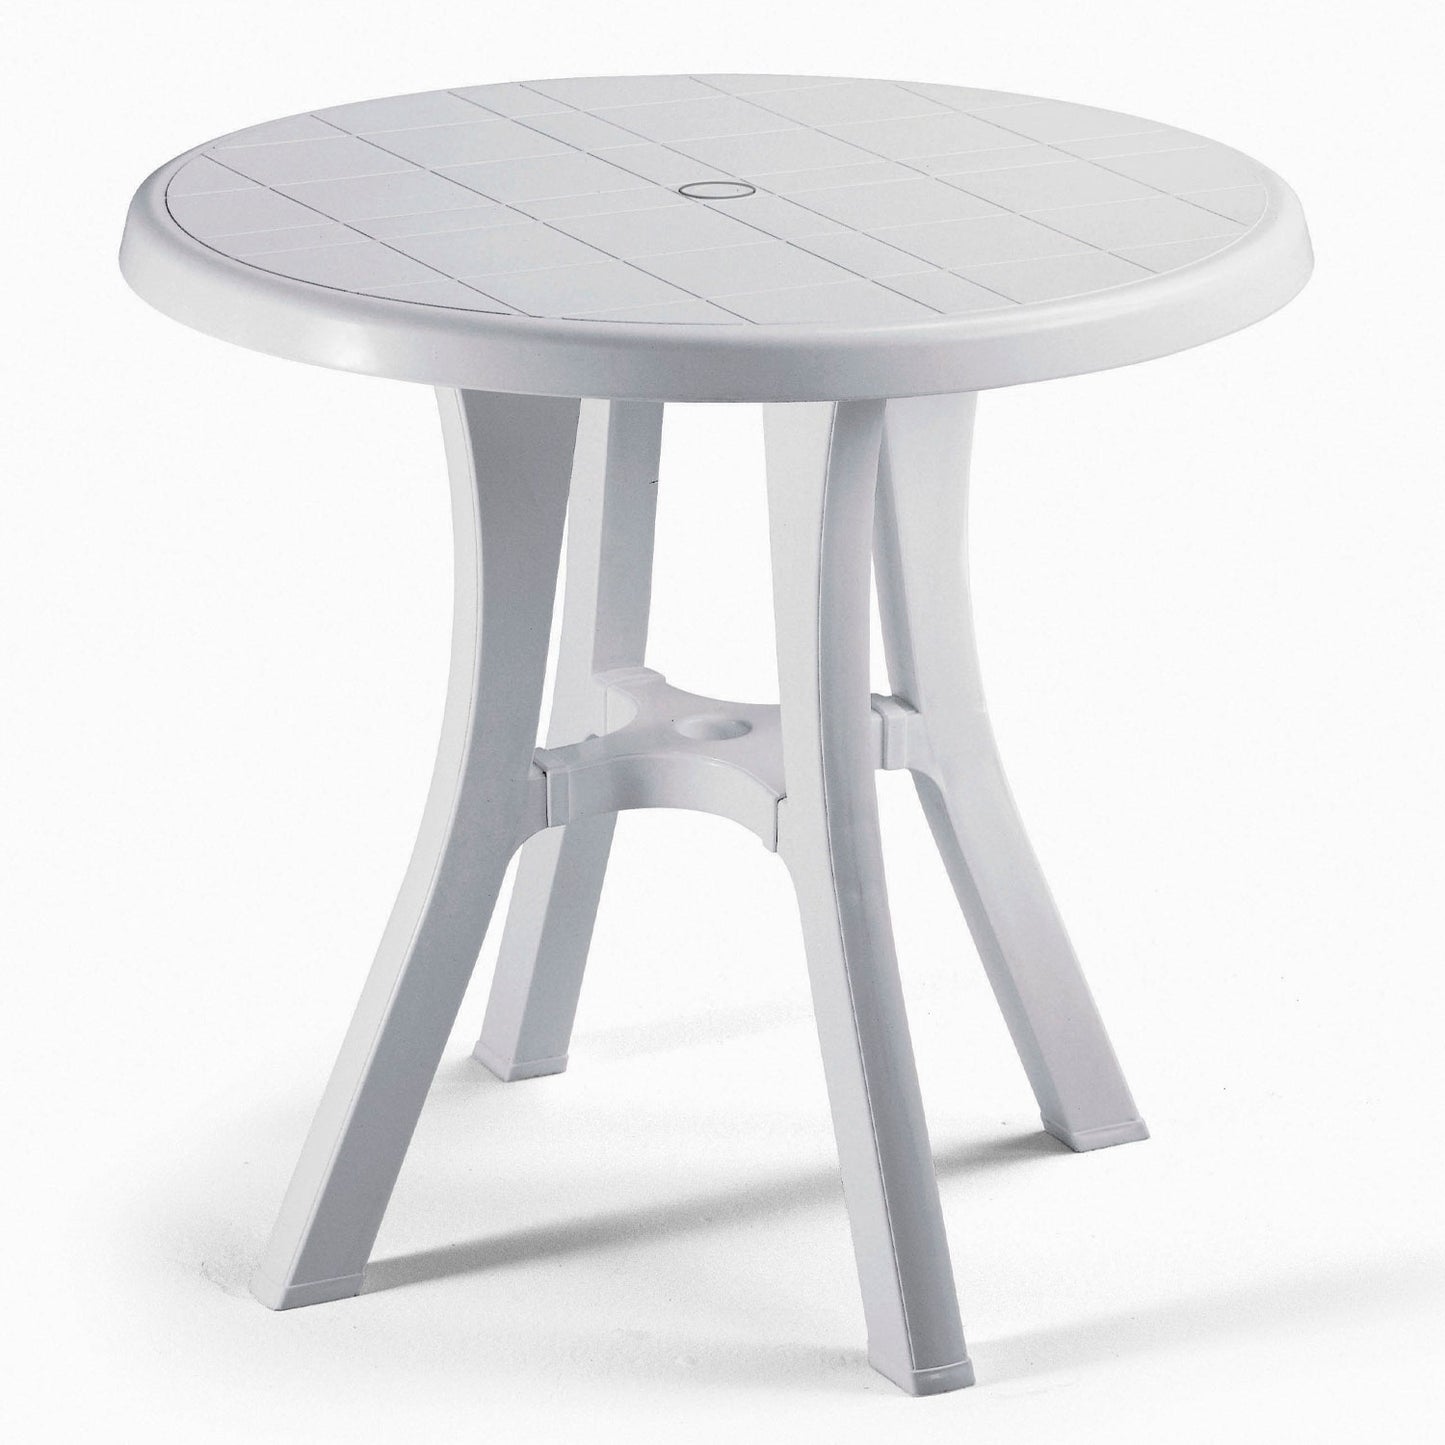 Pol 80cm Round Bistro Table by Scab Design